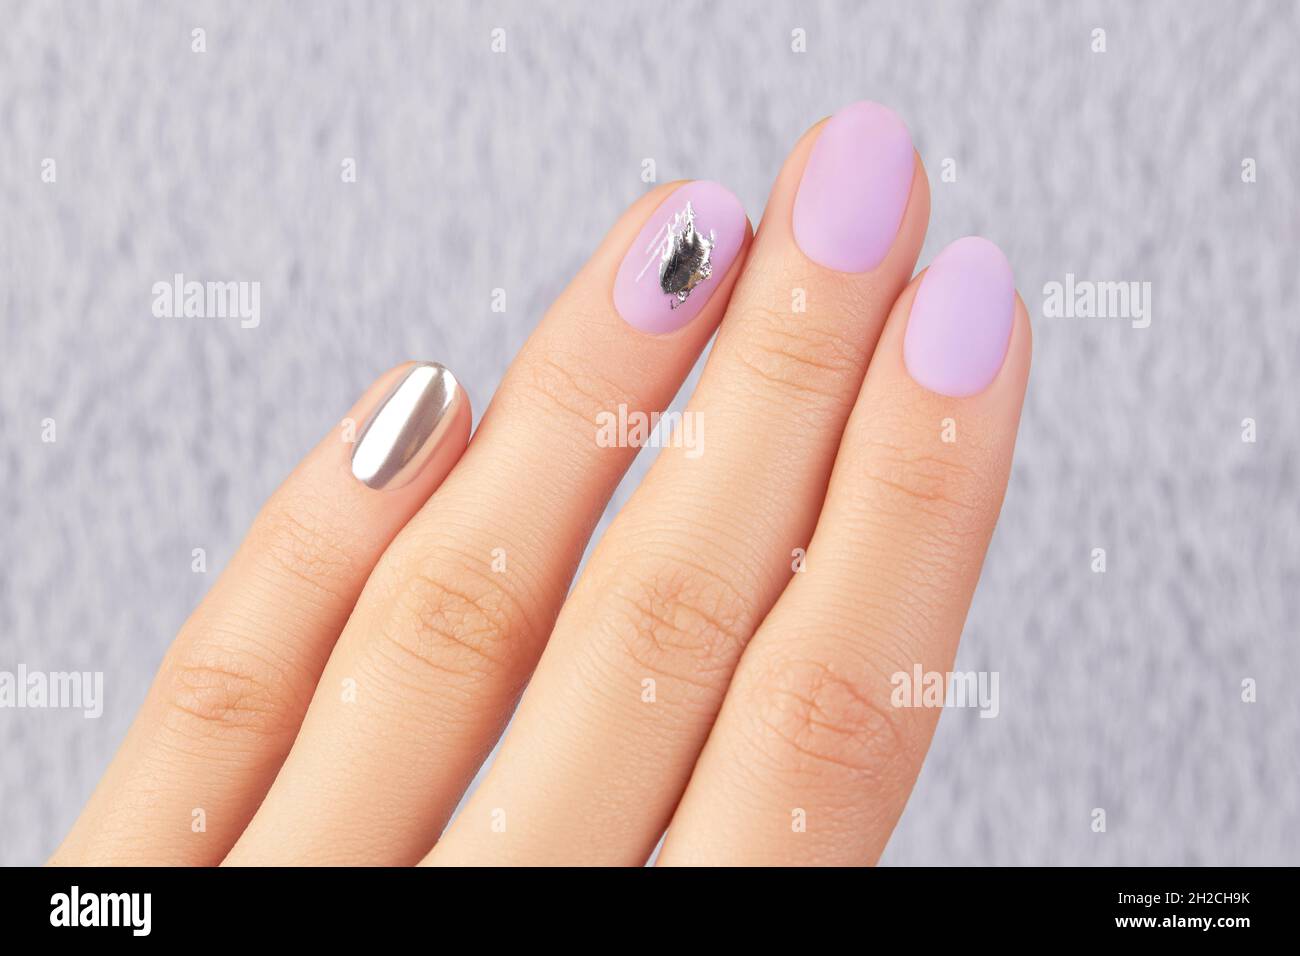 Womans Hands with Trendy Lavender Manicure. Spring Summer Nail Design Stock  Image - Image of fingernail, lavender: 226372517